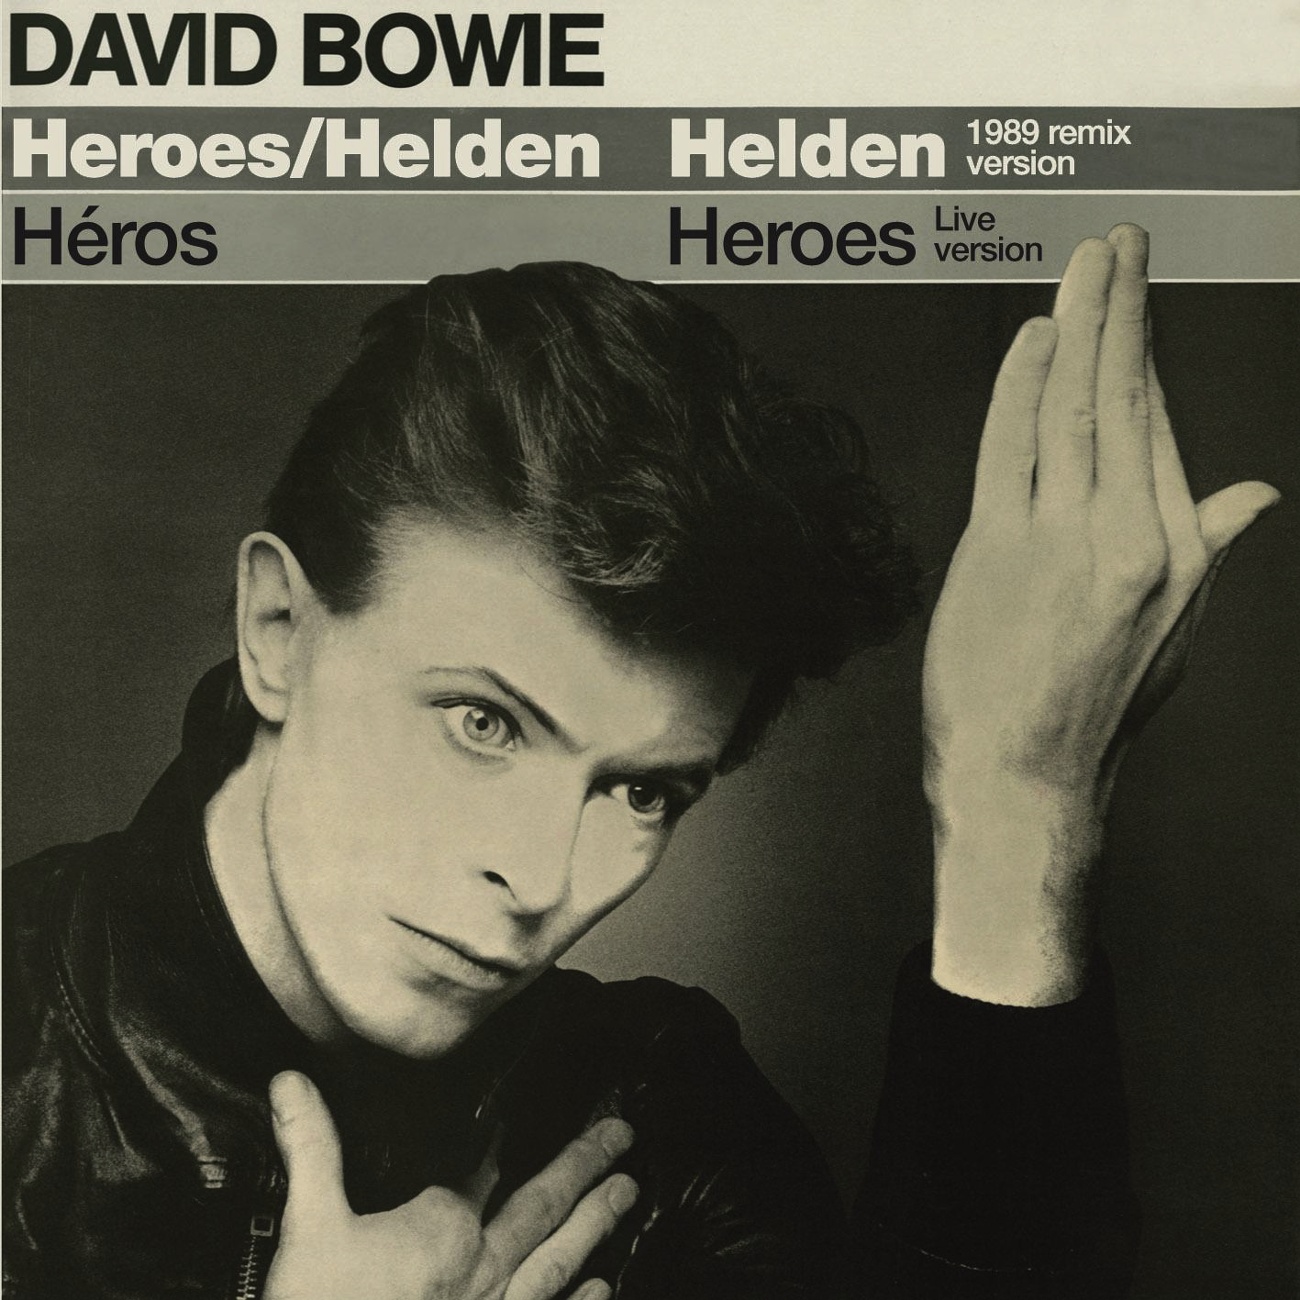 'Helden' (German Version 1989 Remix) (2002 Digital Remaster)